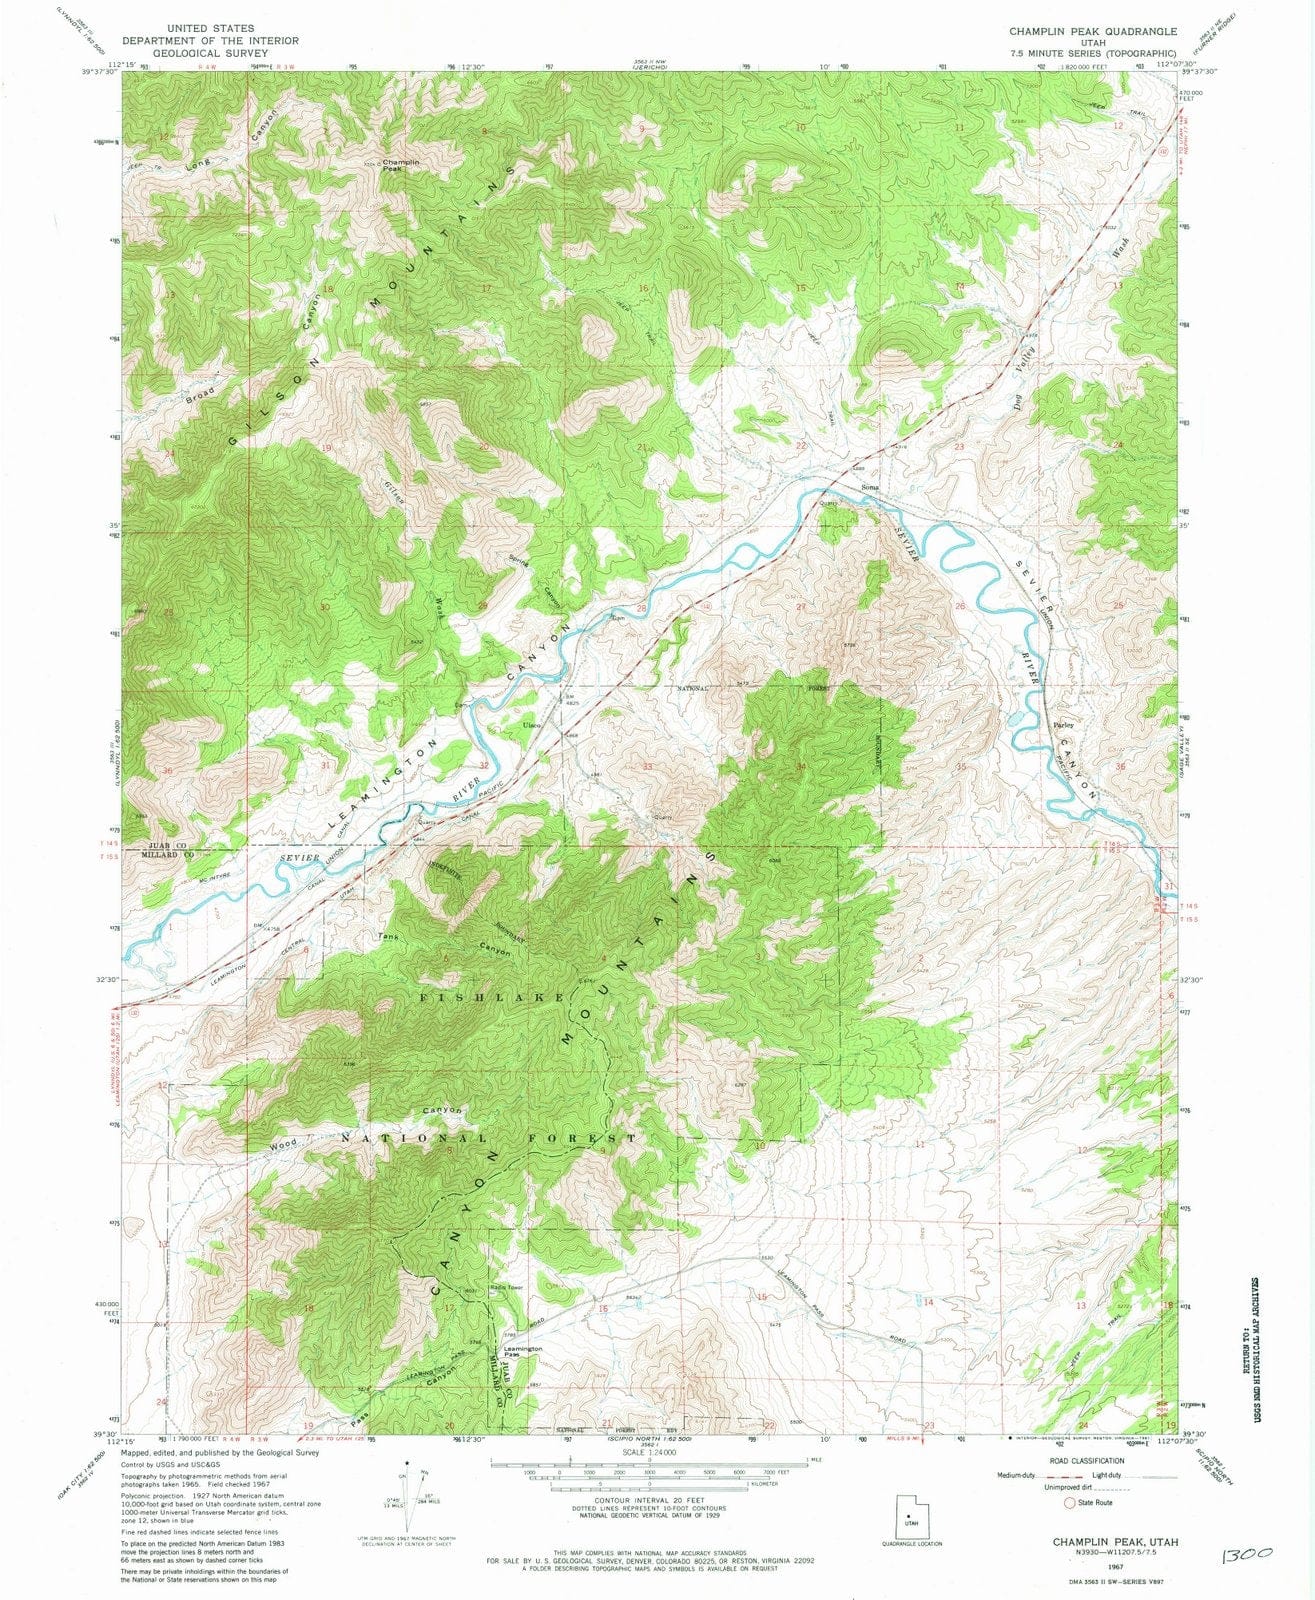 1967 Champlin Peak, UT - Utah - USGS Topographic Map